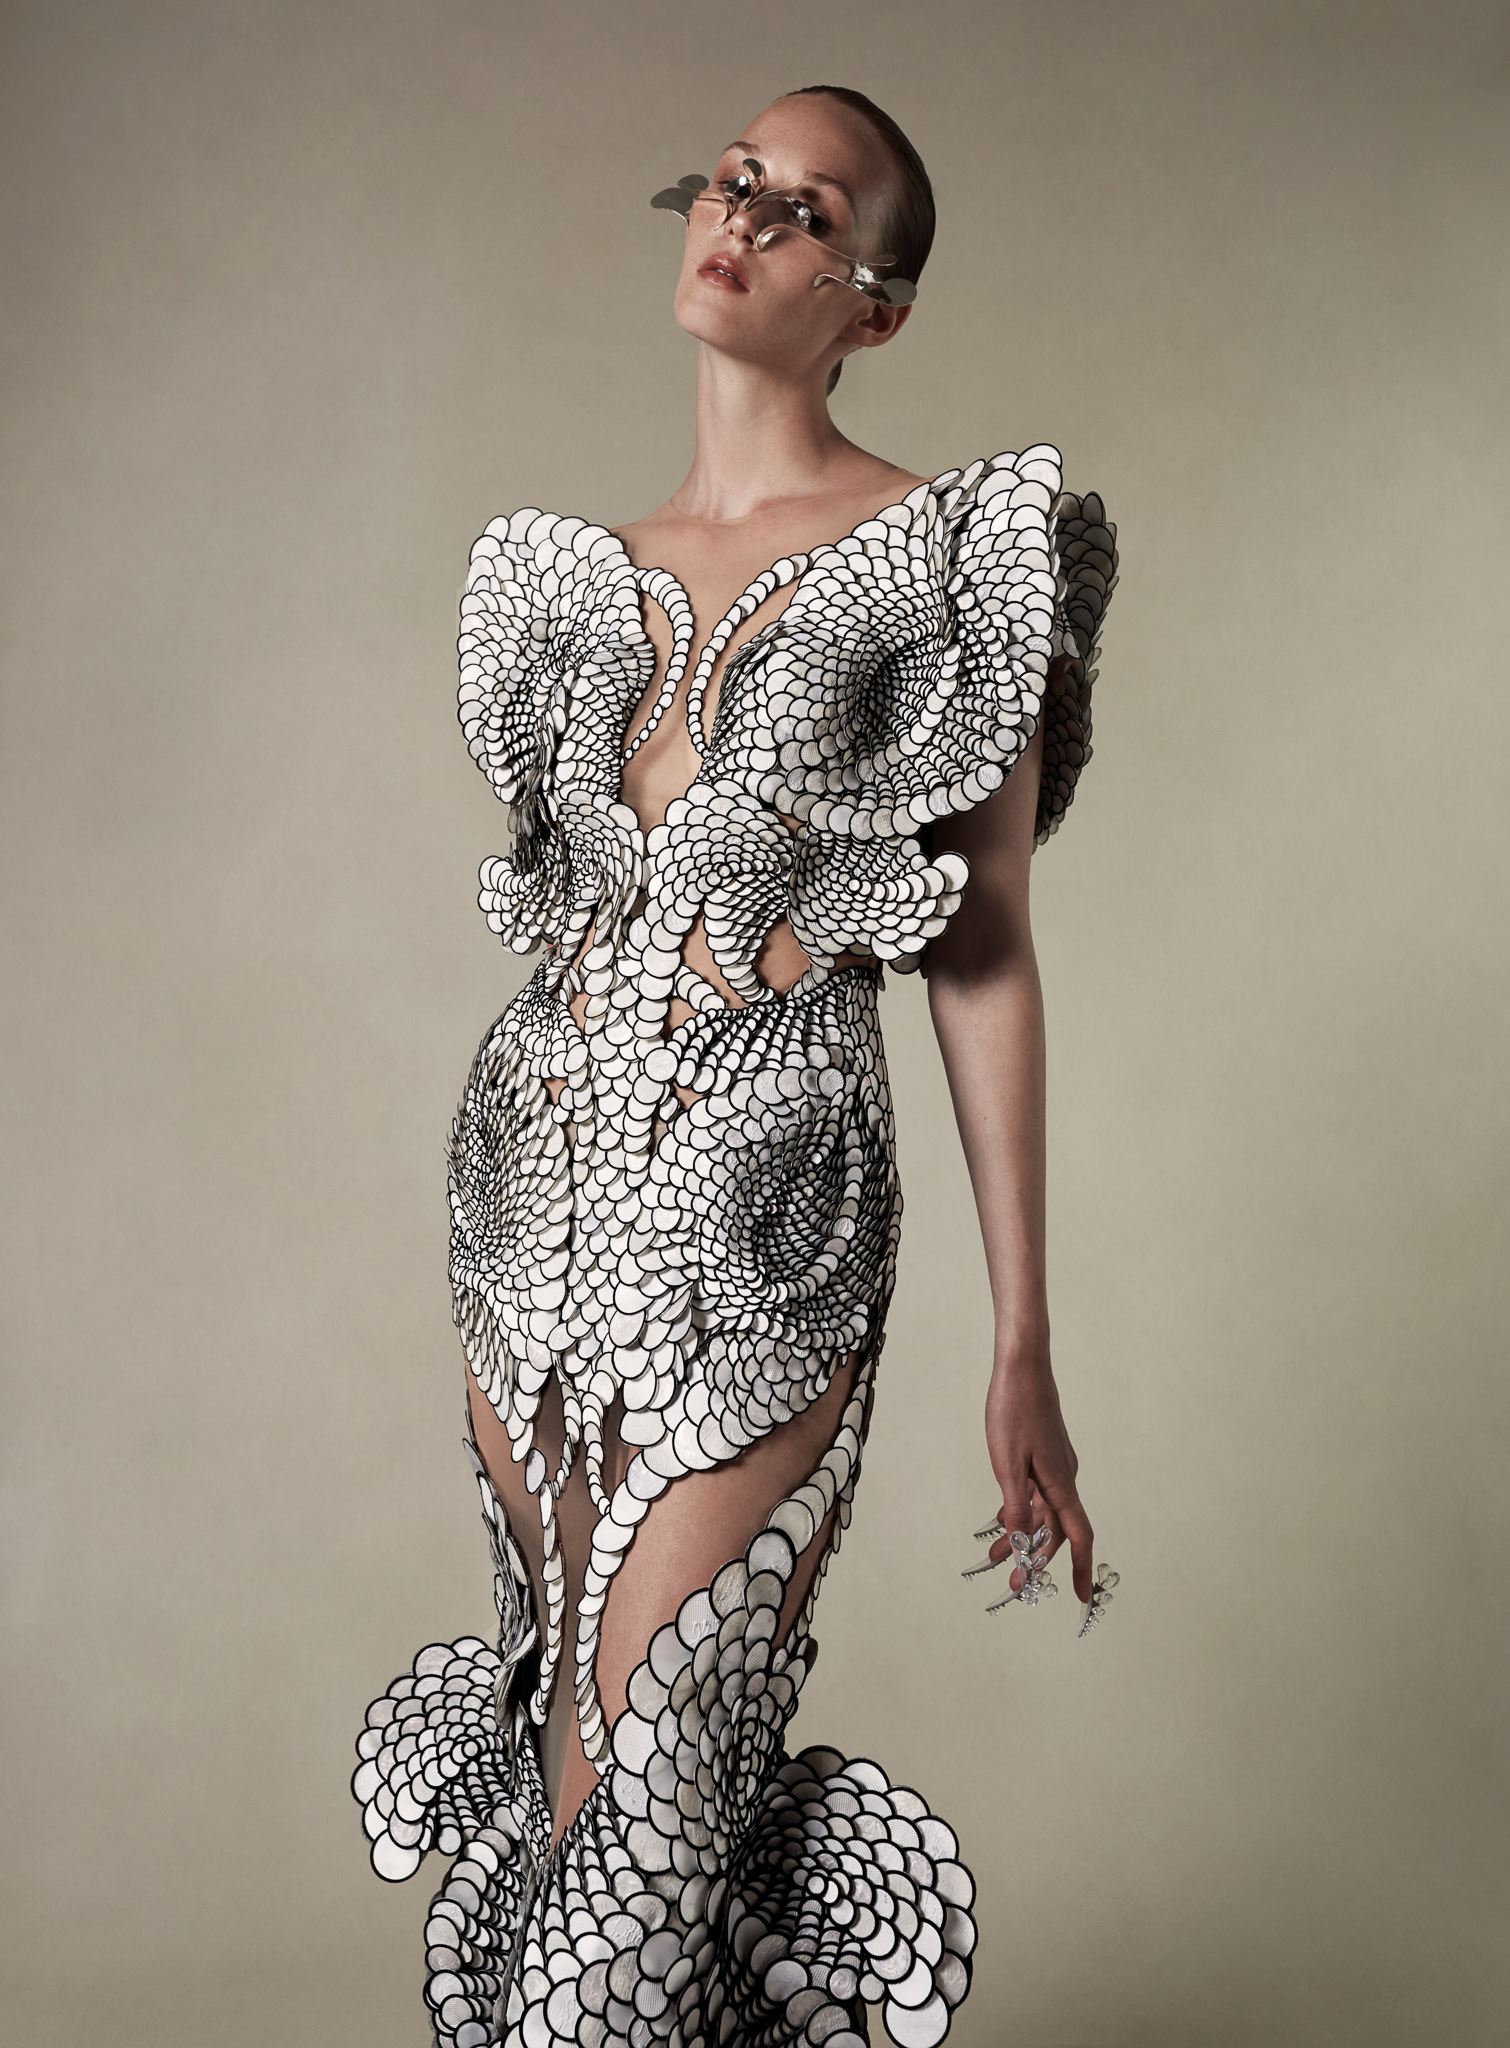 Iris van Herpen Recycles Plastic Waste into Sculptural Garments Fashion